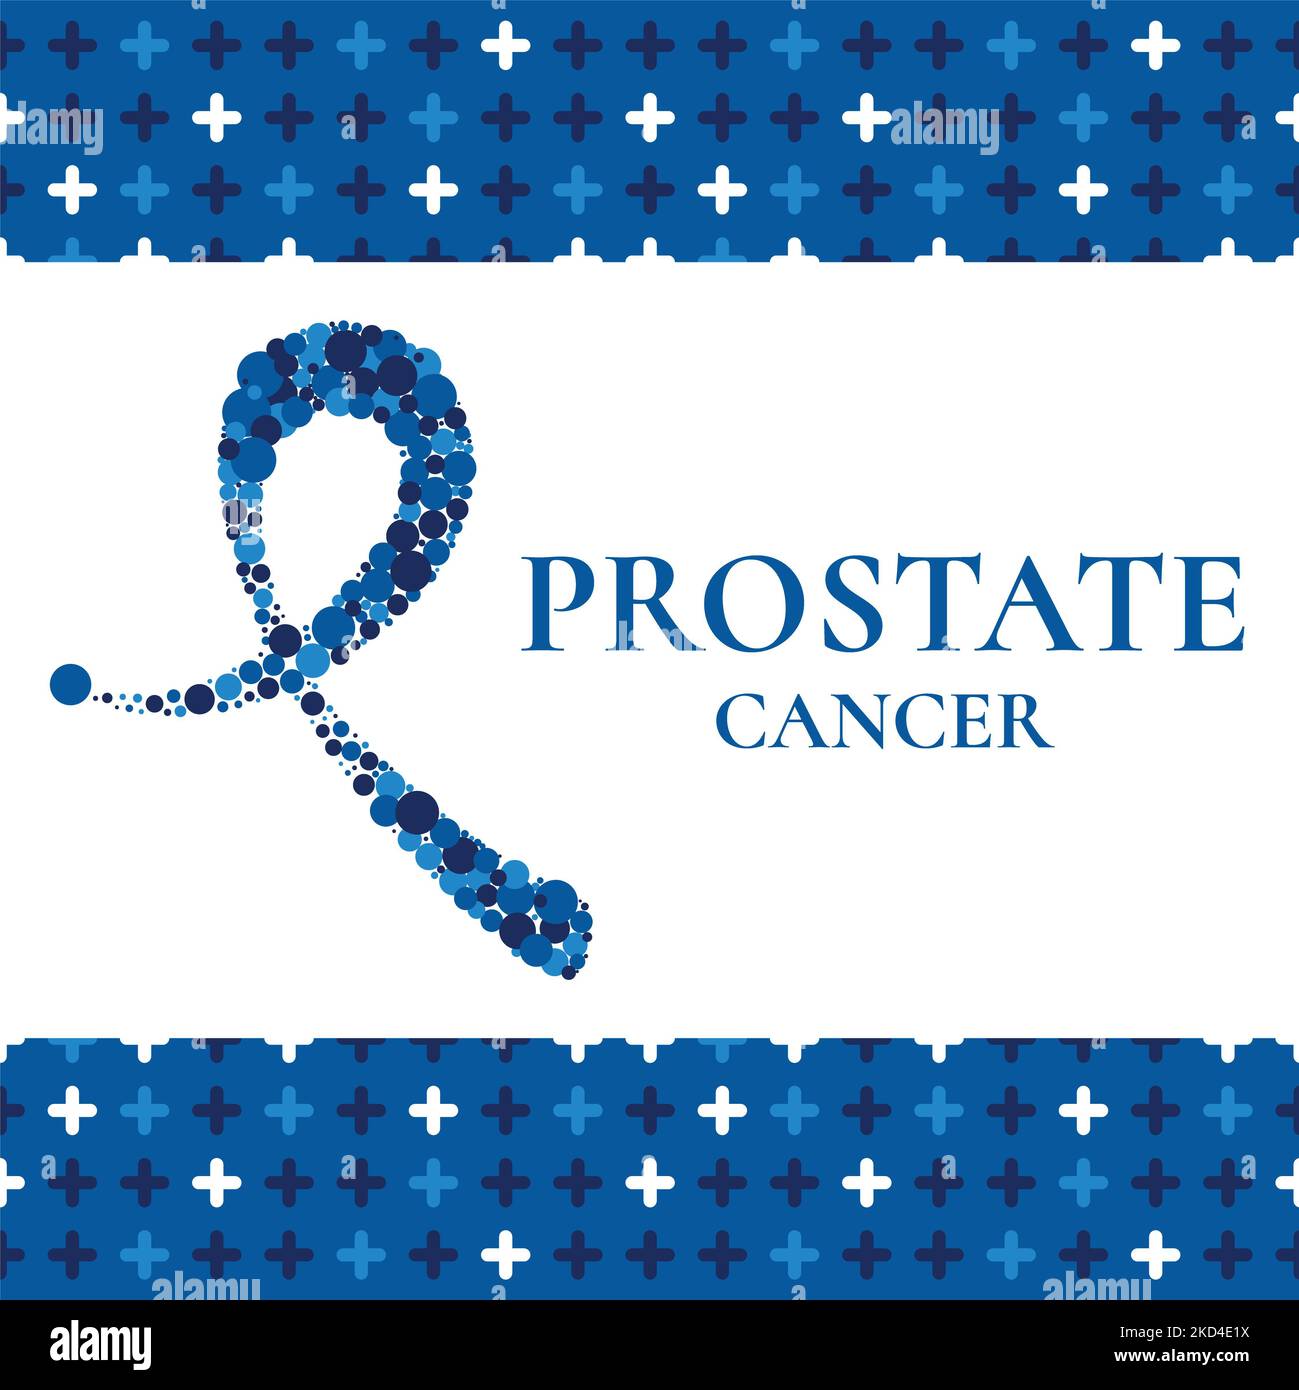 Prostate cancer, conceptual illustration Stock Photo